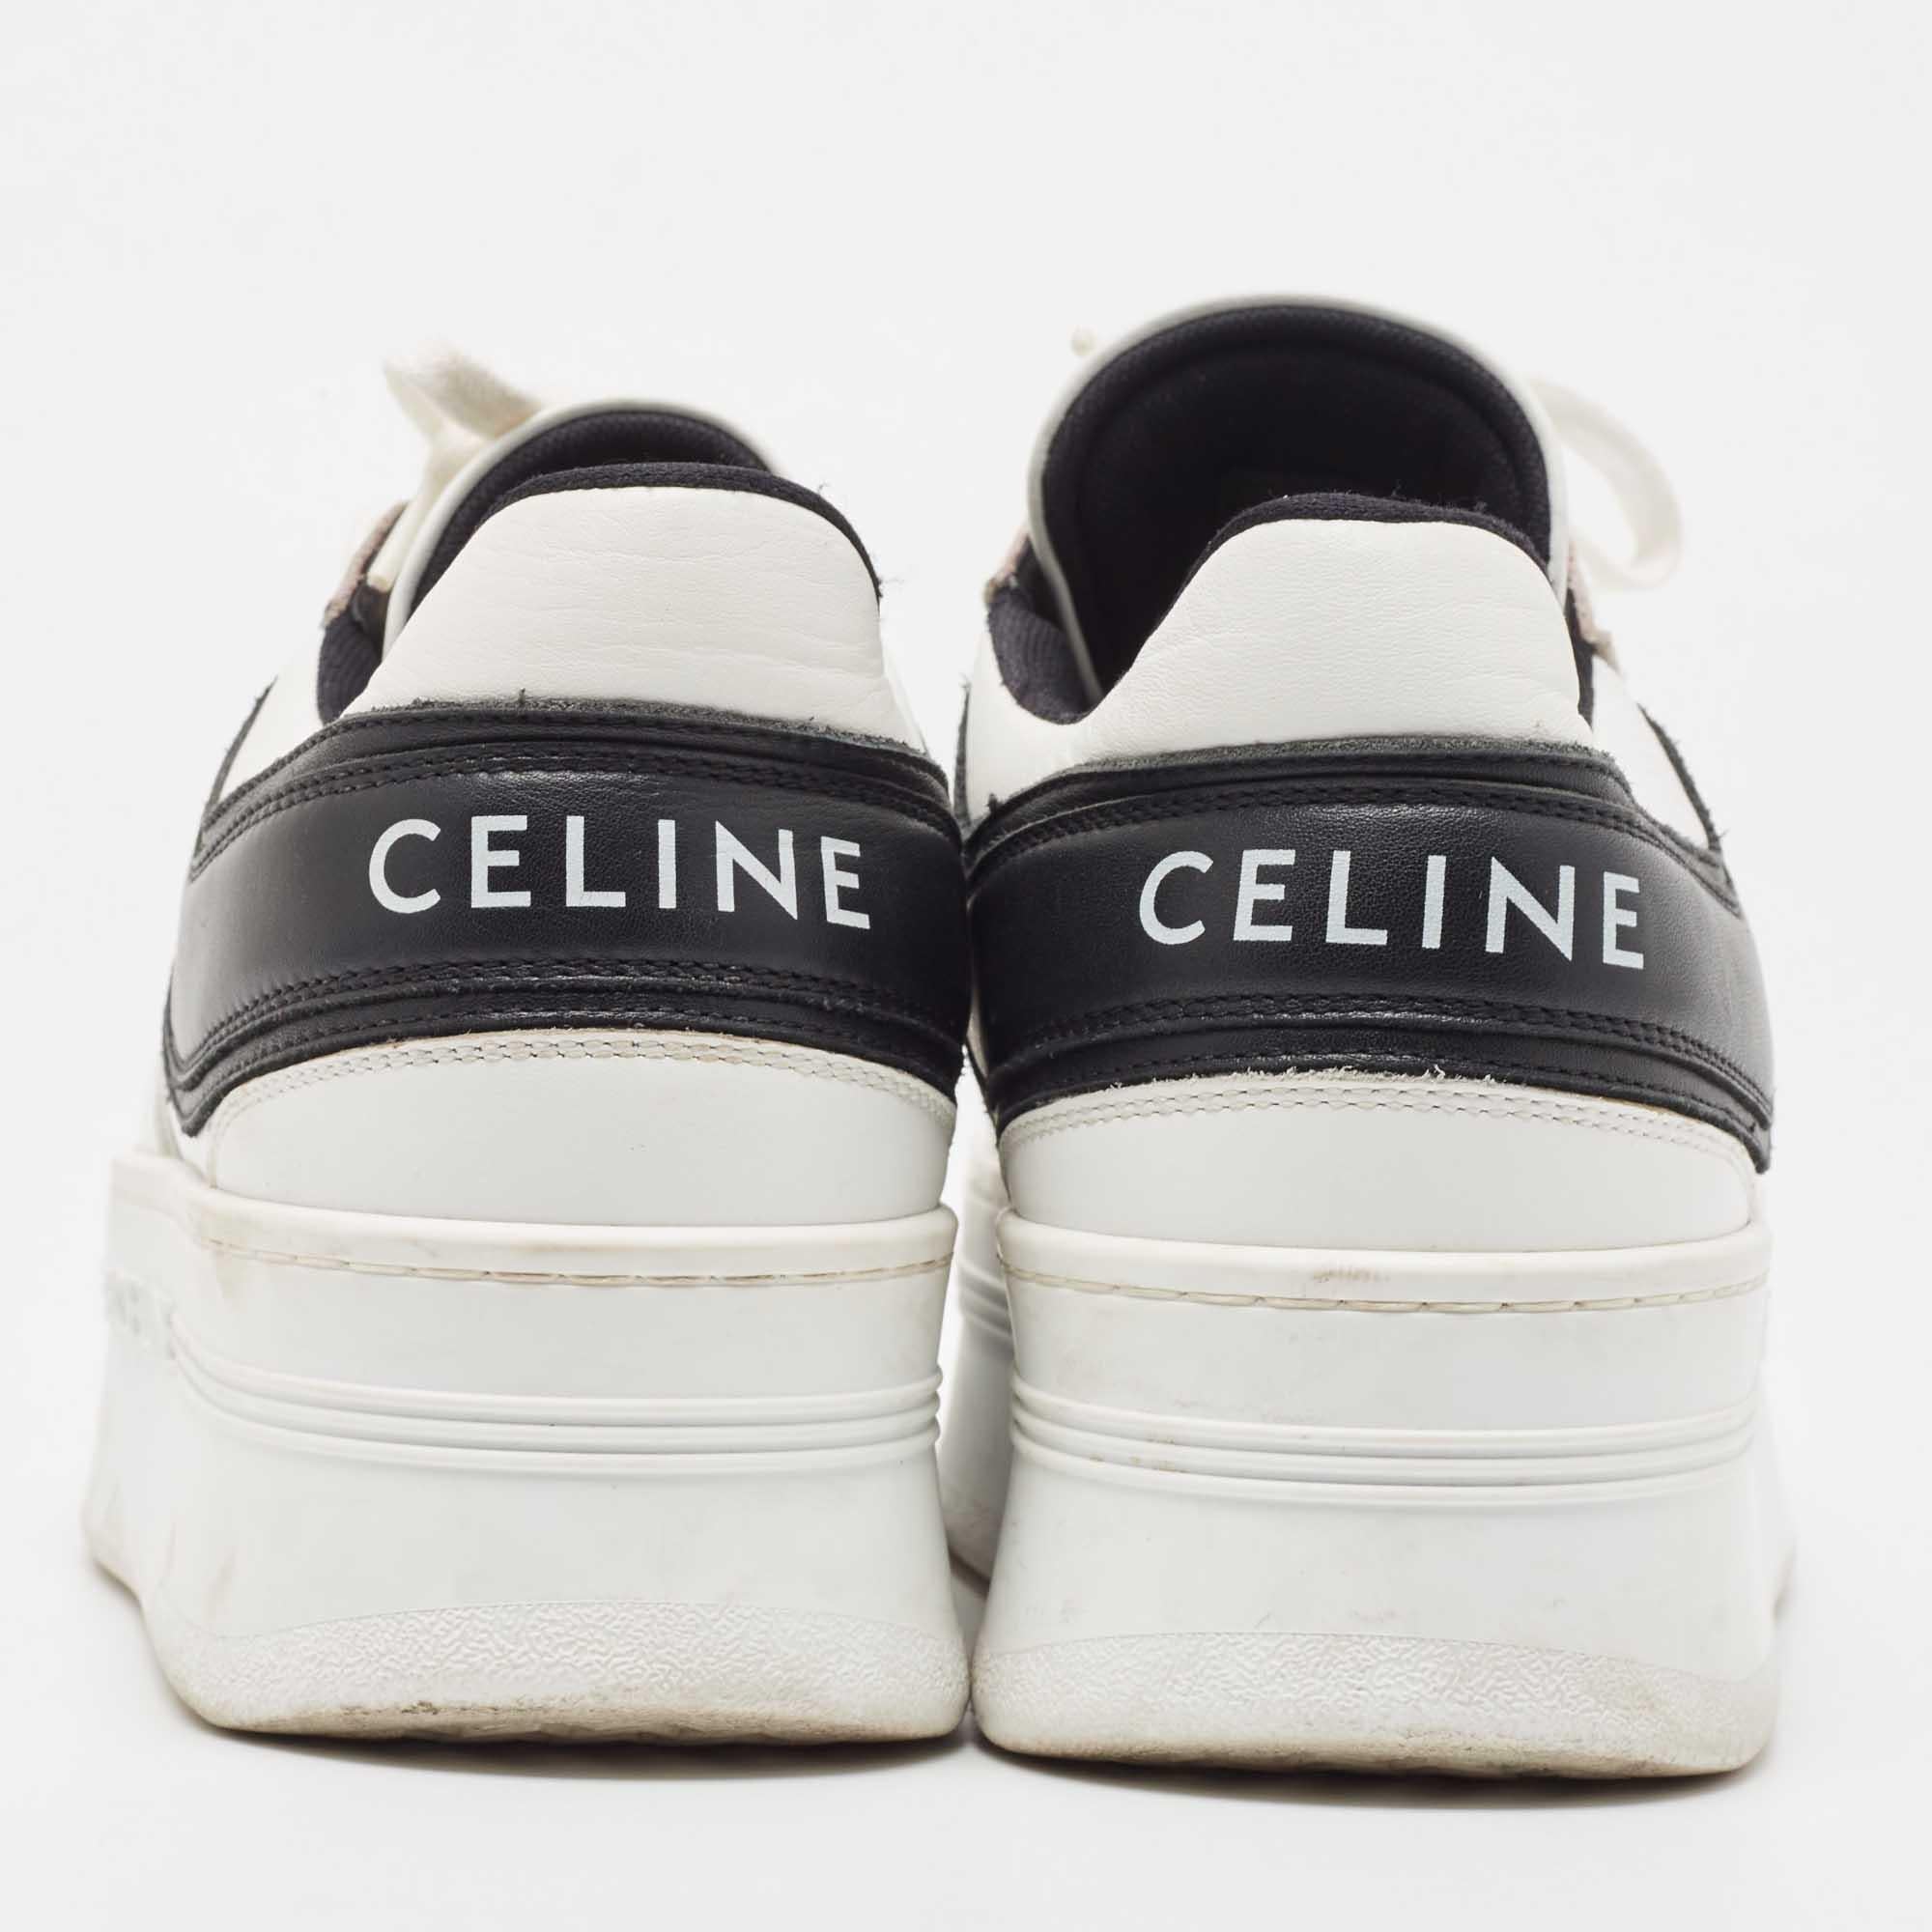 Celine White/Black Leather Block Platform Sneakers Size 39 1